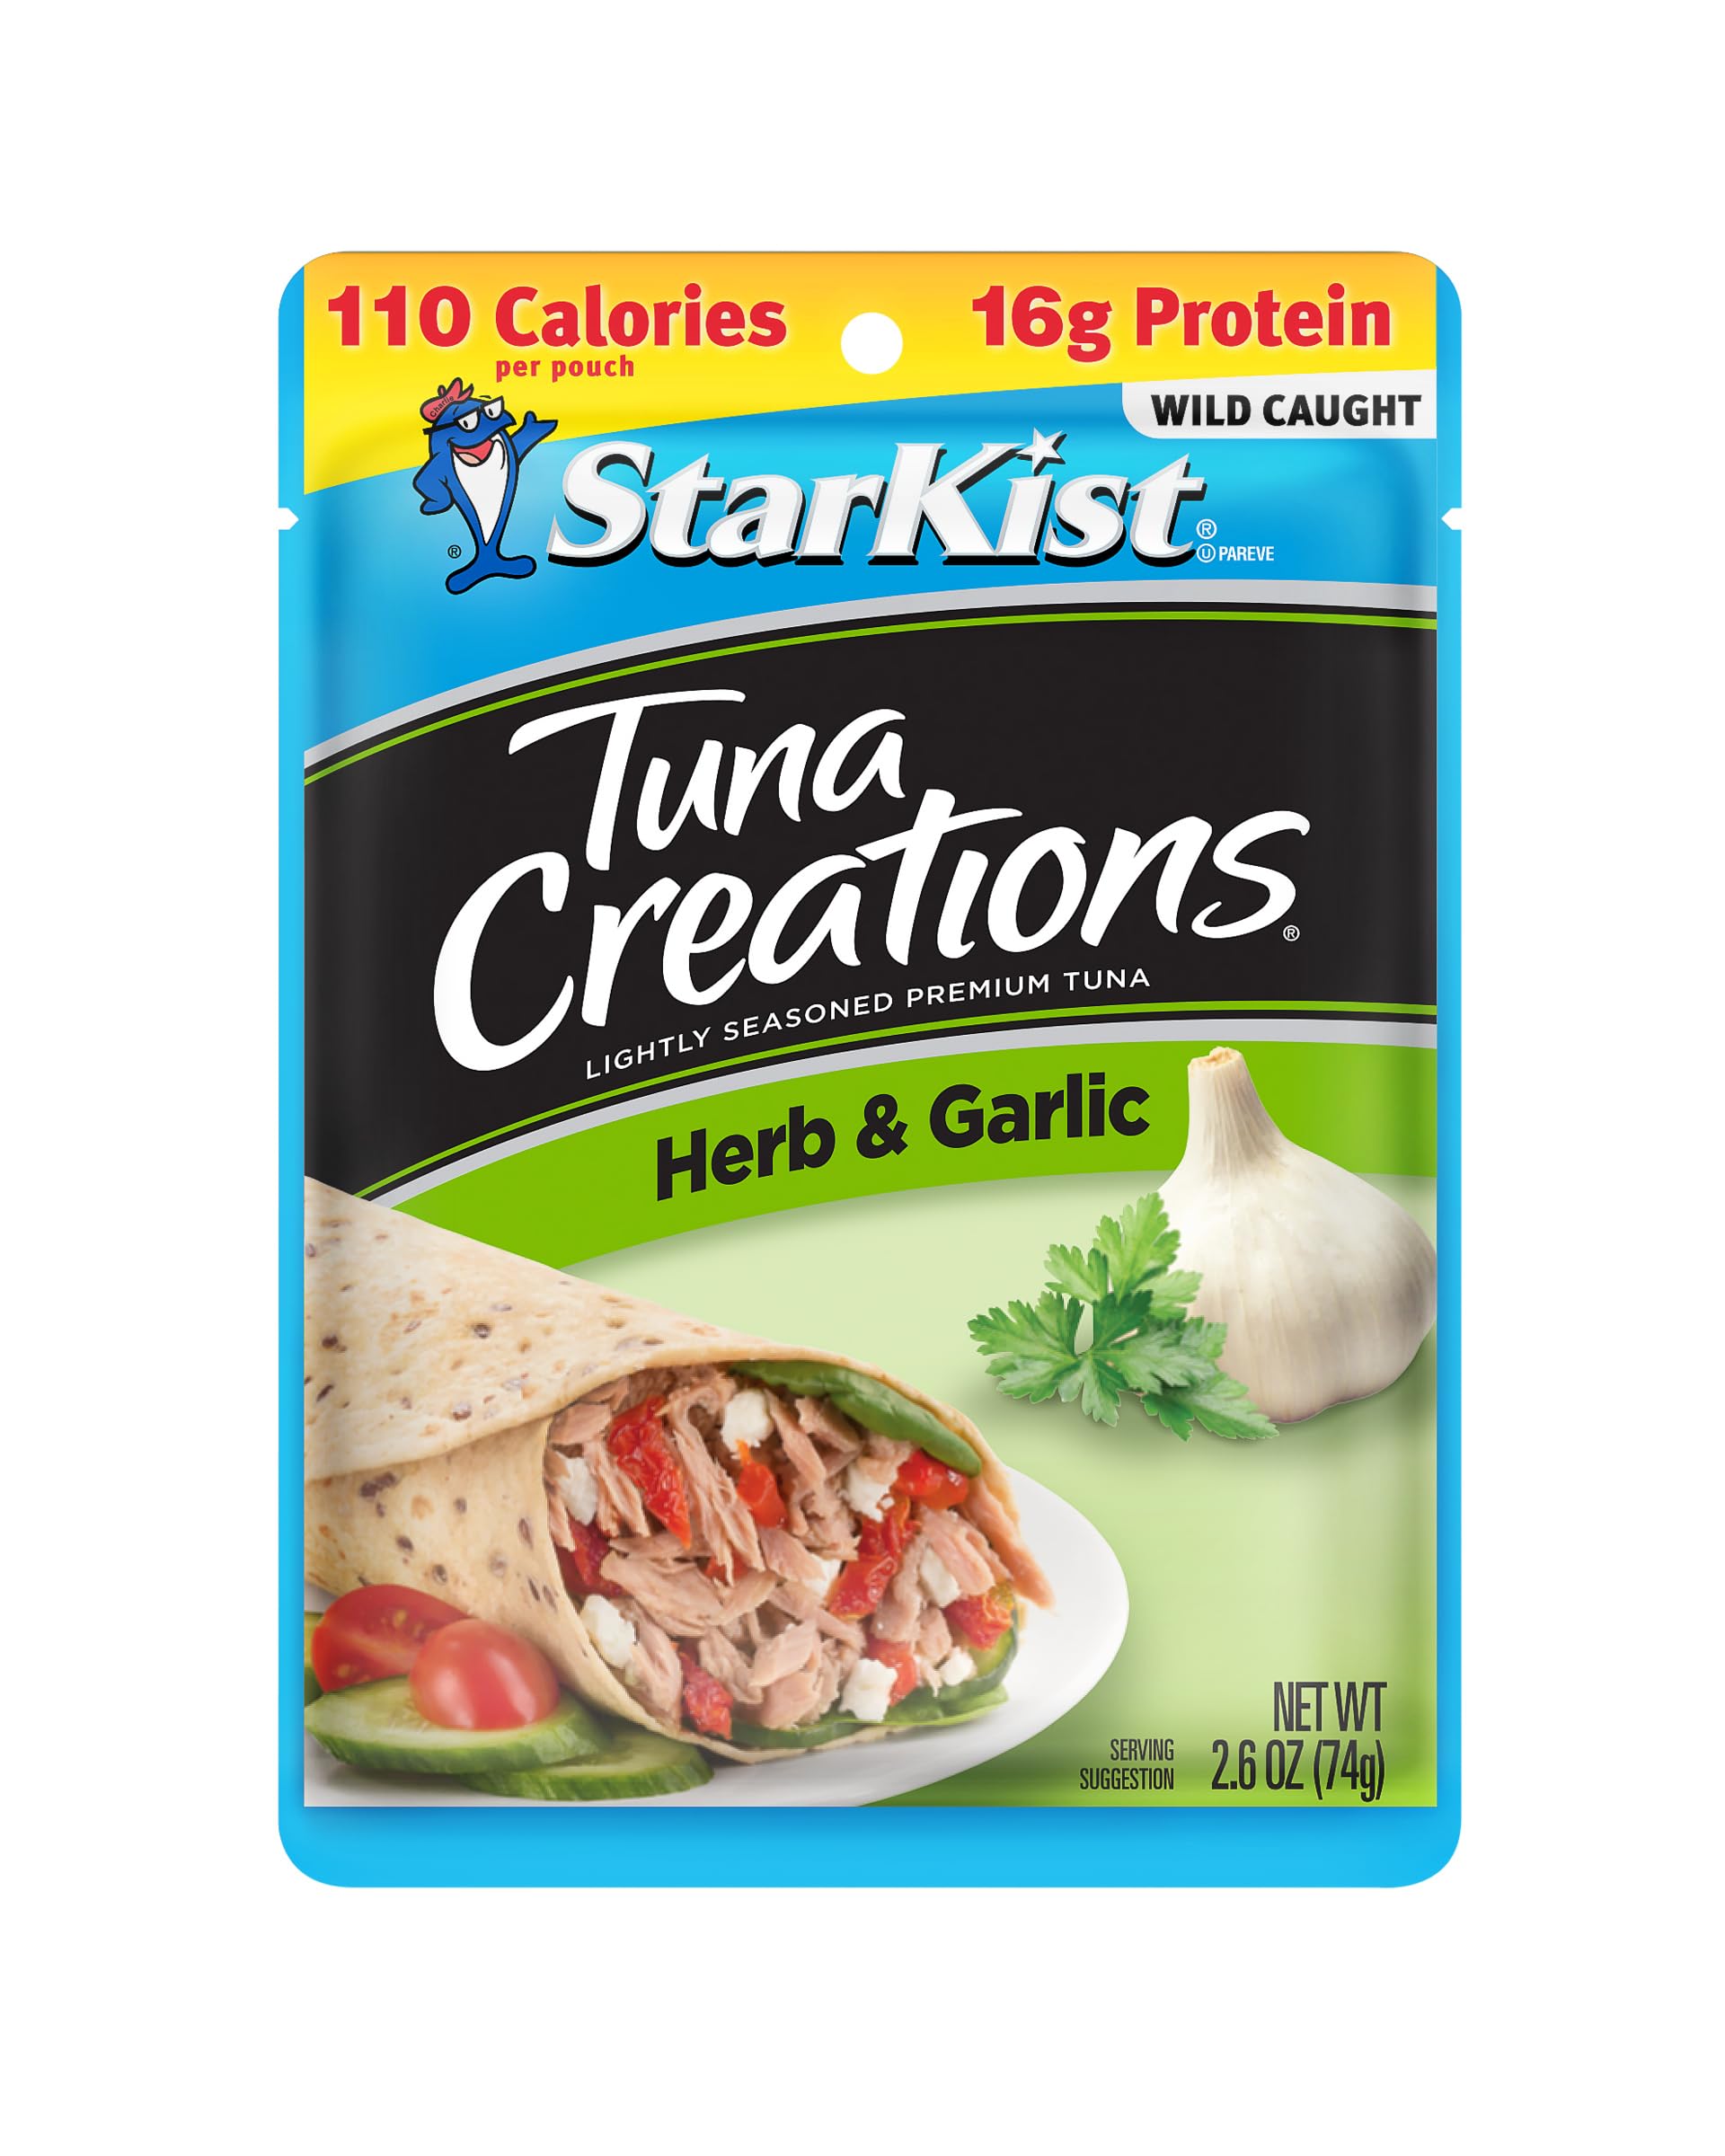 12-Pack 2.6-Oz StarKist Tuna Creations (Herb & Garlic) $9.85 w/ S&S + Free Shipping w/ Prime or $35+